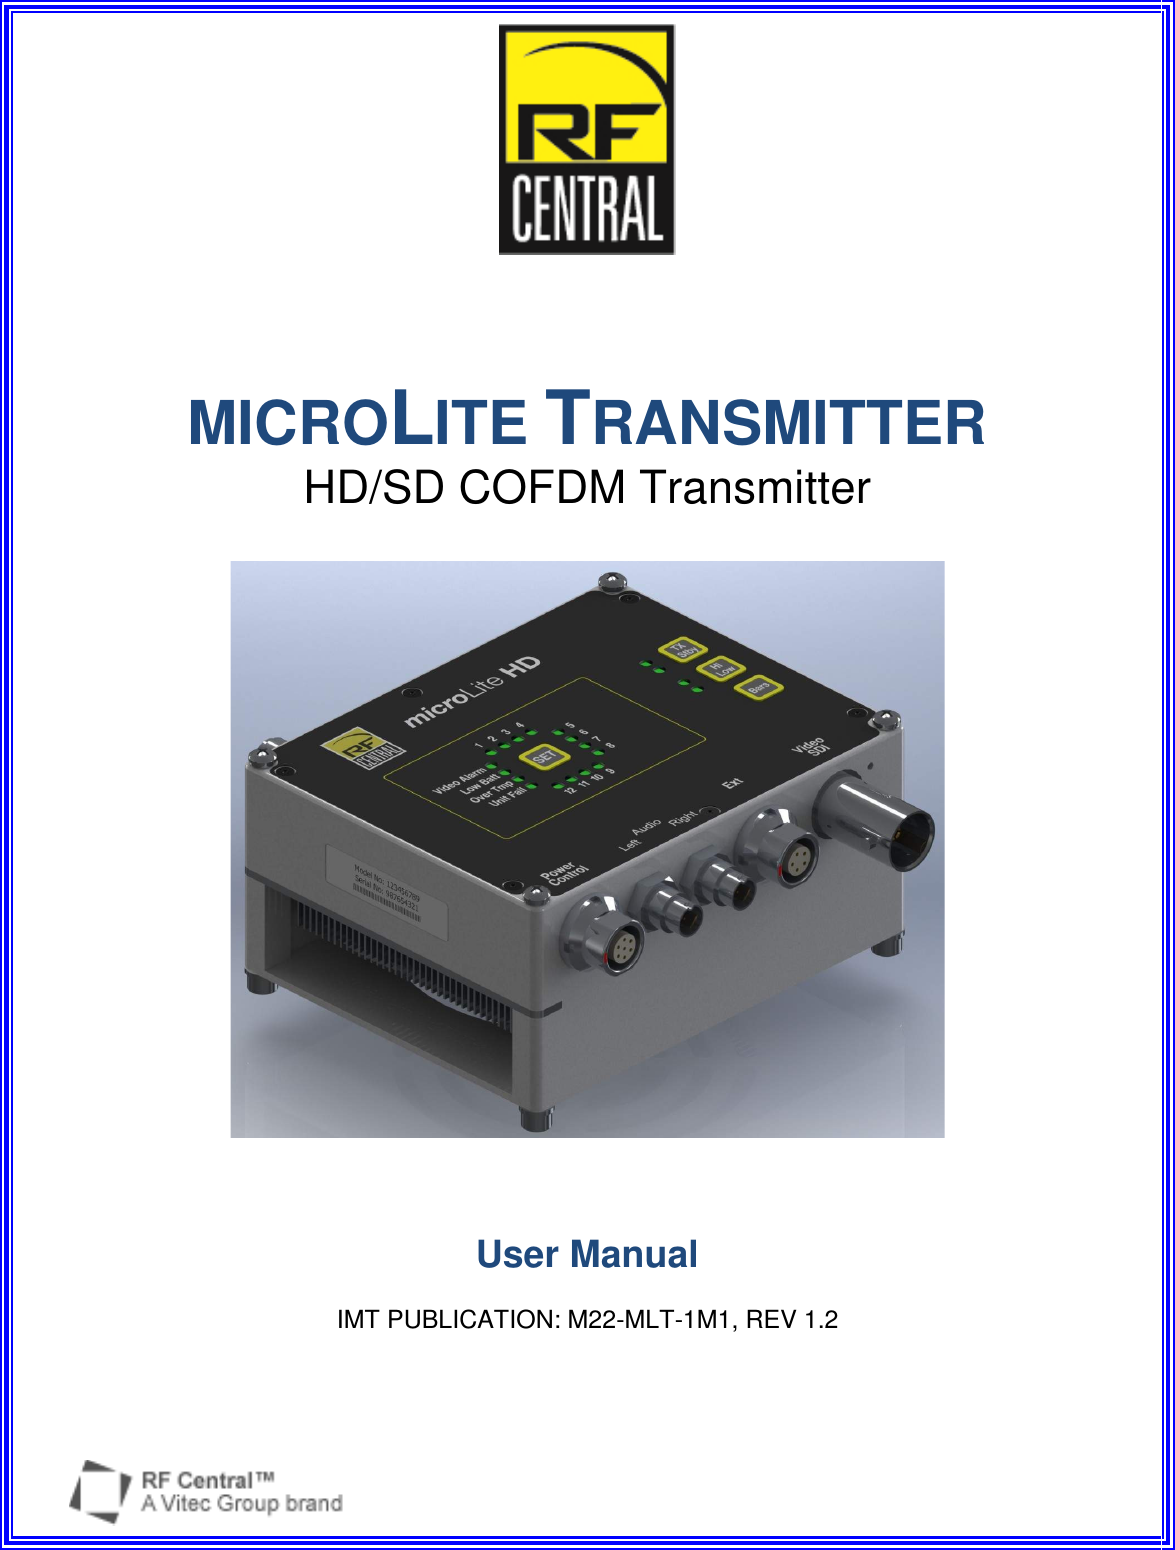        MICROLITE TRANSMITTER HD/SD COFDM Transmitter         User Manual  IMT PUBLICATION: M22-MLT-1M1, REV 1.2